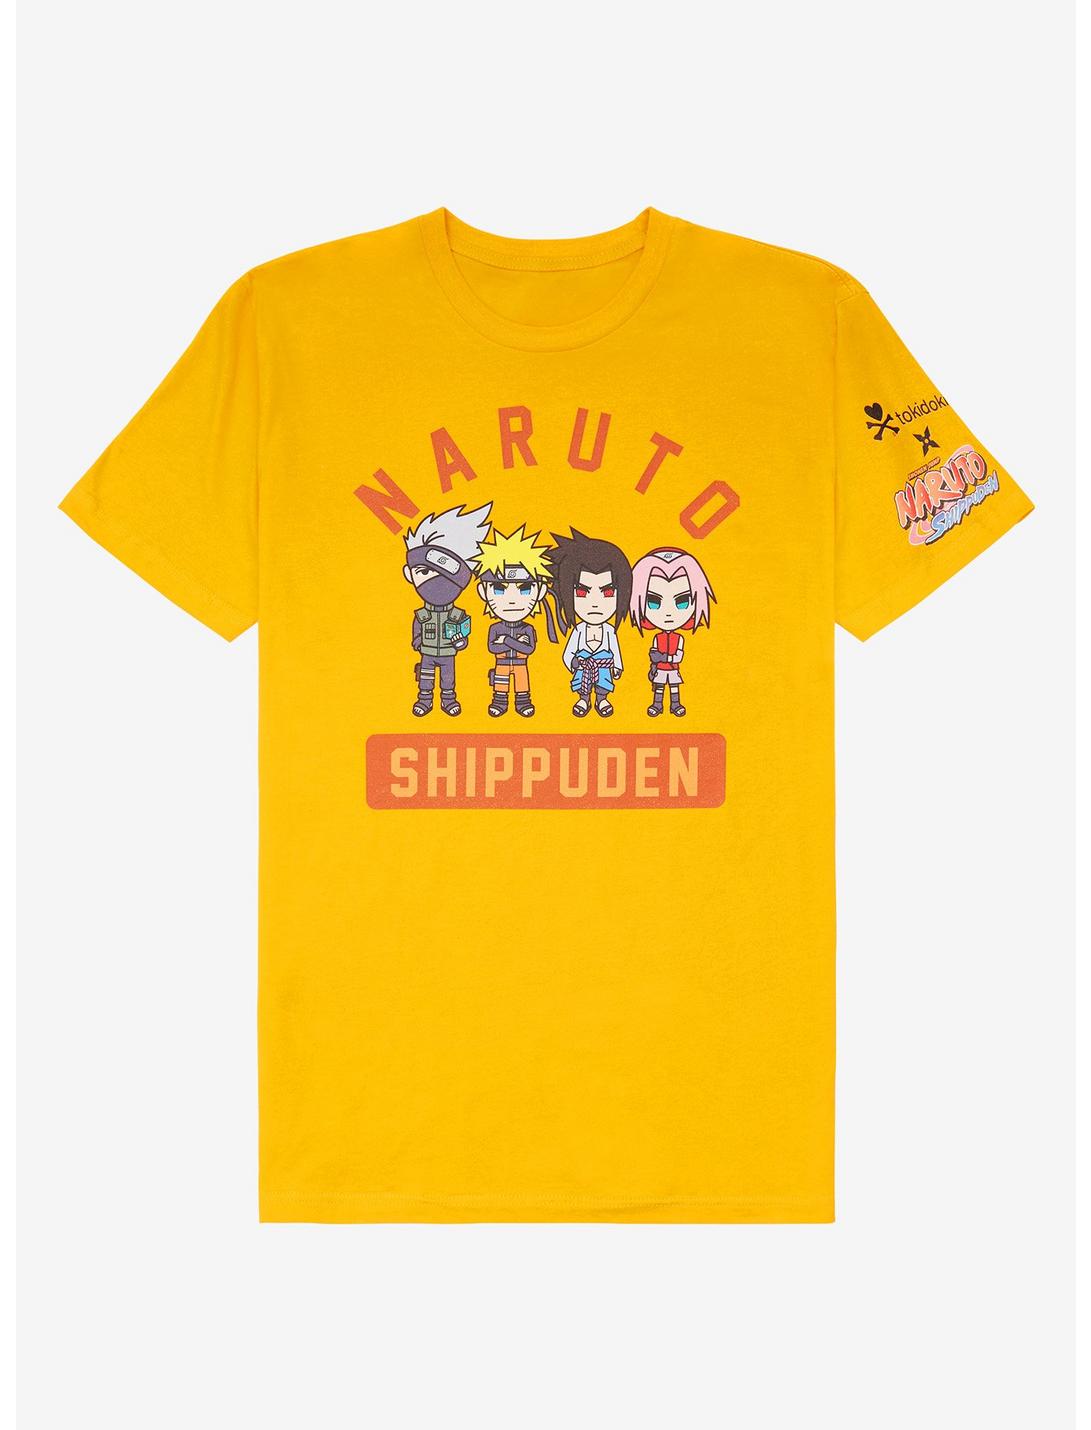 tokidoki x Naruto Shippuden Team 7 T-Shirt - BoxLunch Exclusive, ORANGE, hi-res